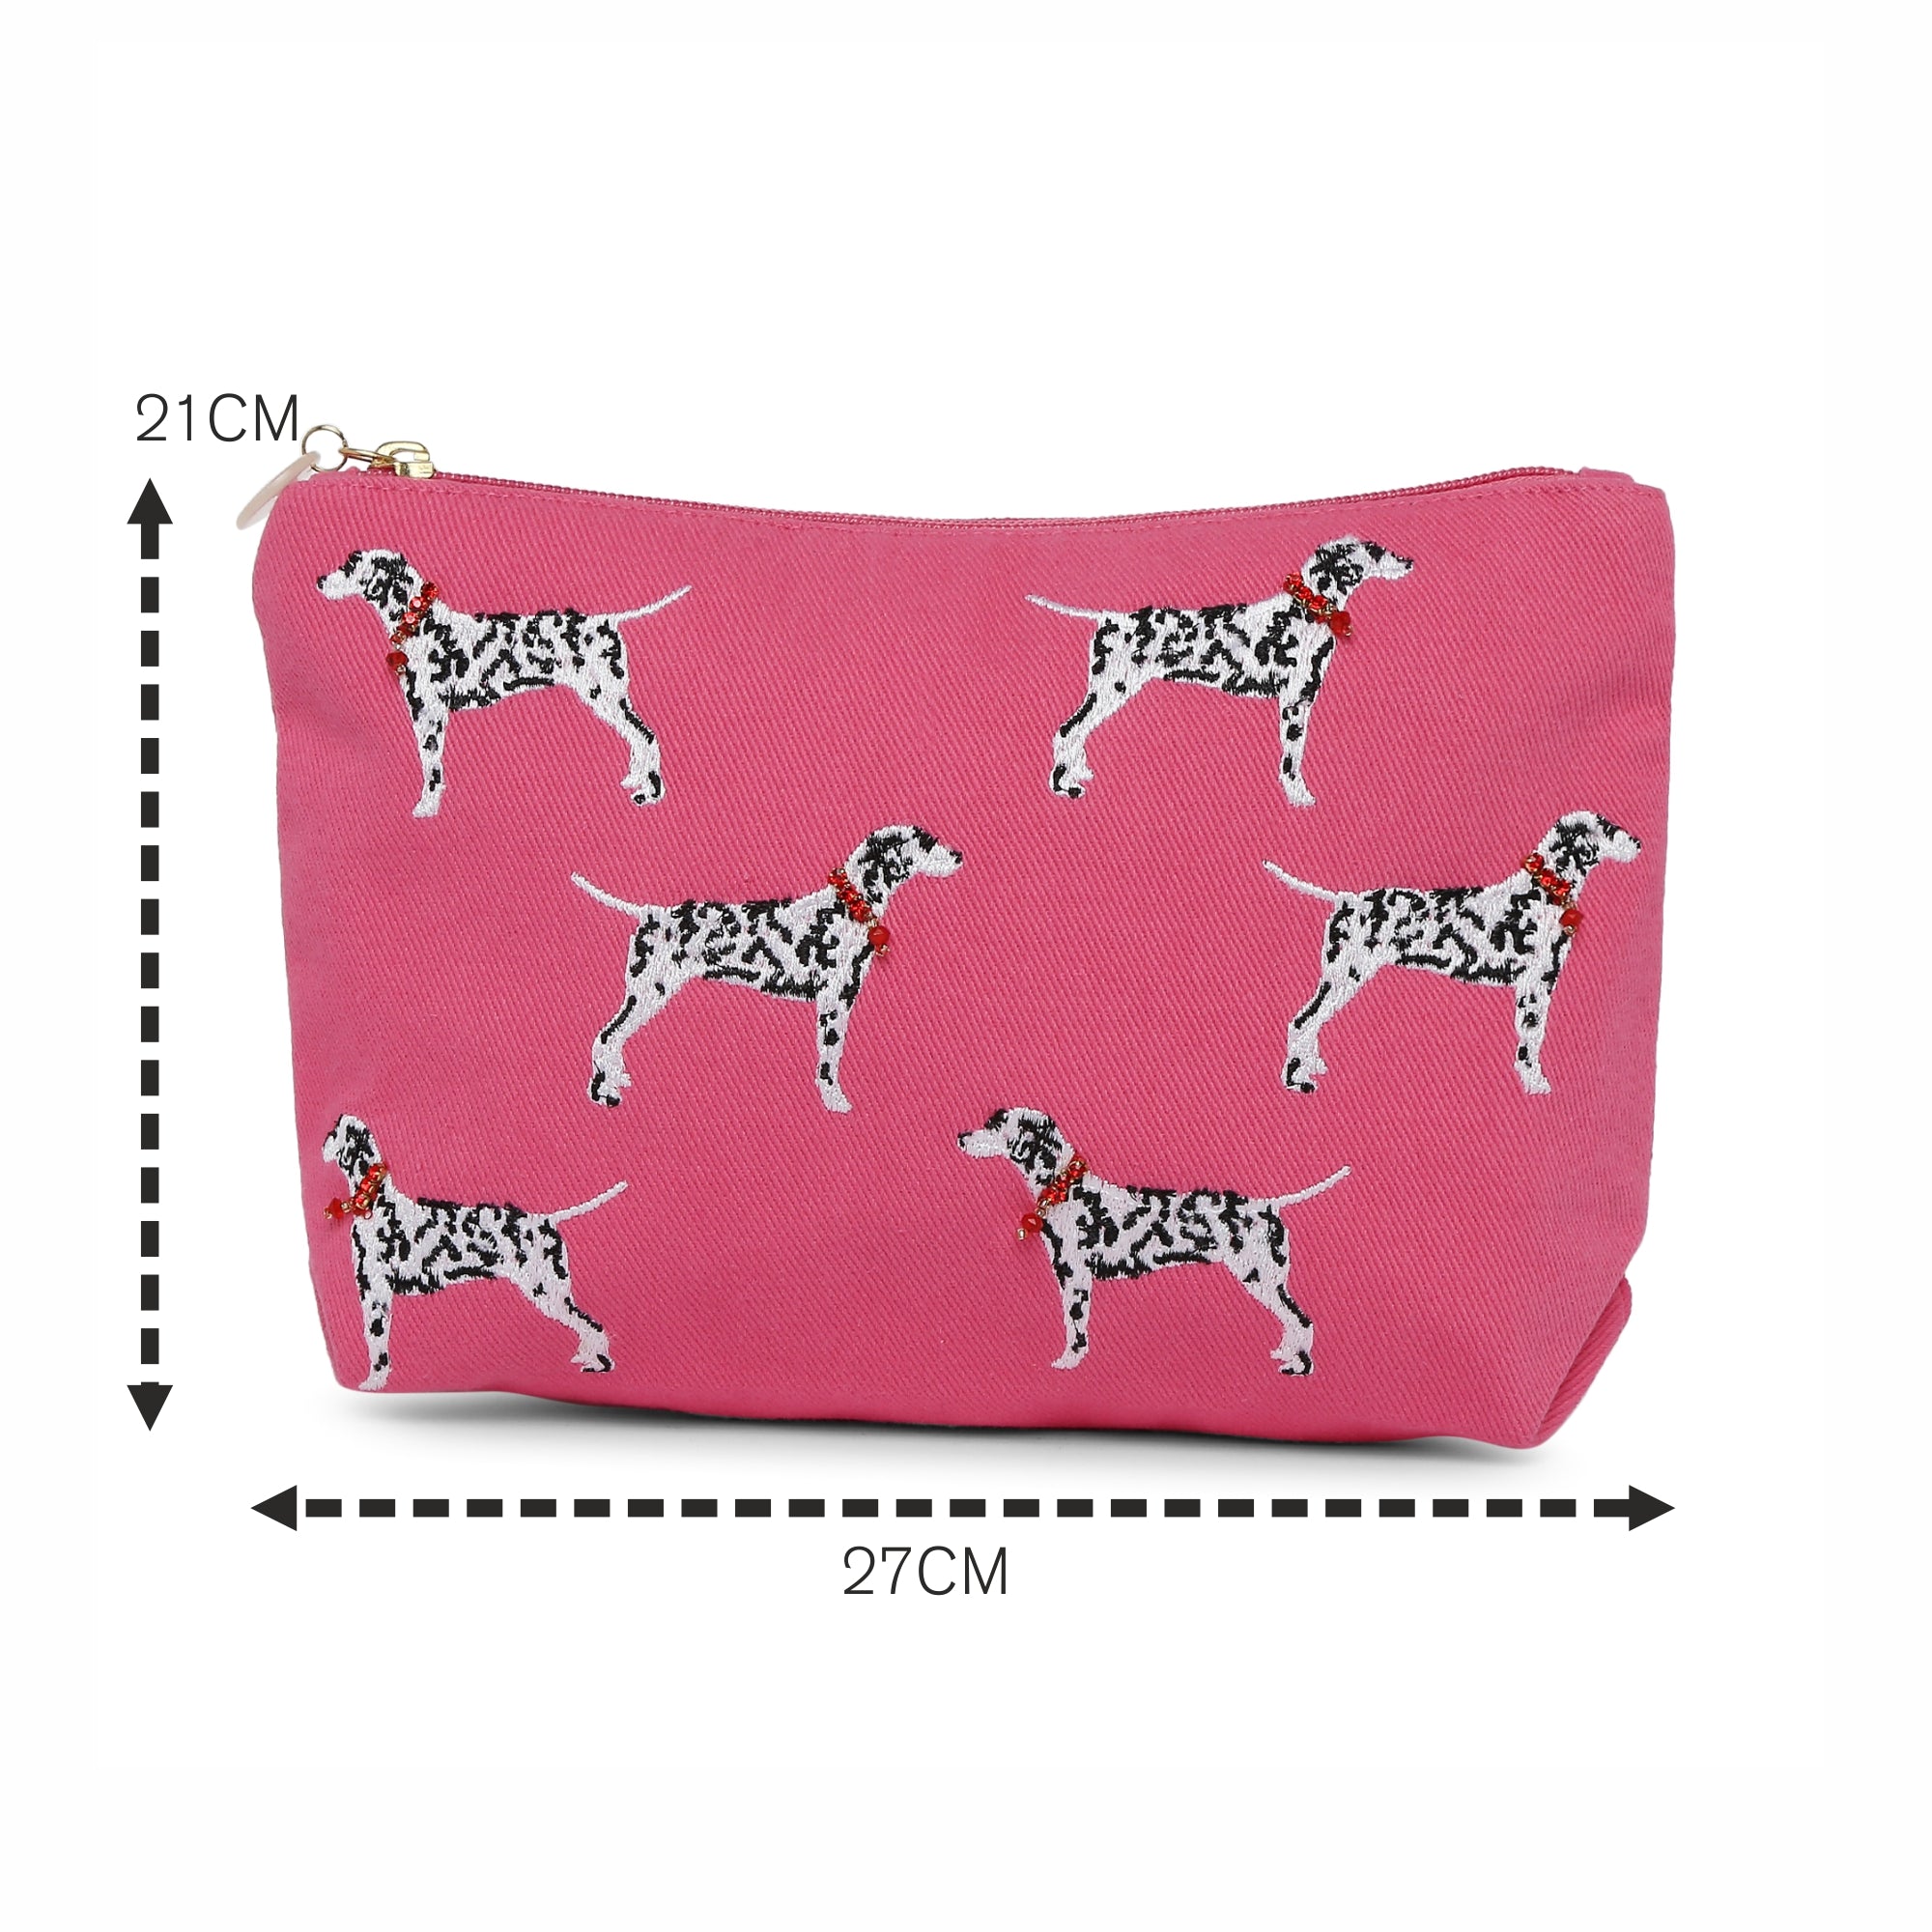 Accessorize London Women's Cotton Pink Dalmatian Large Make Up Bag